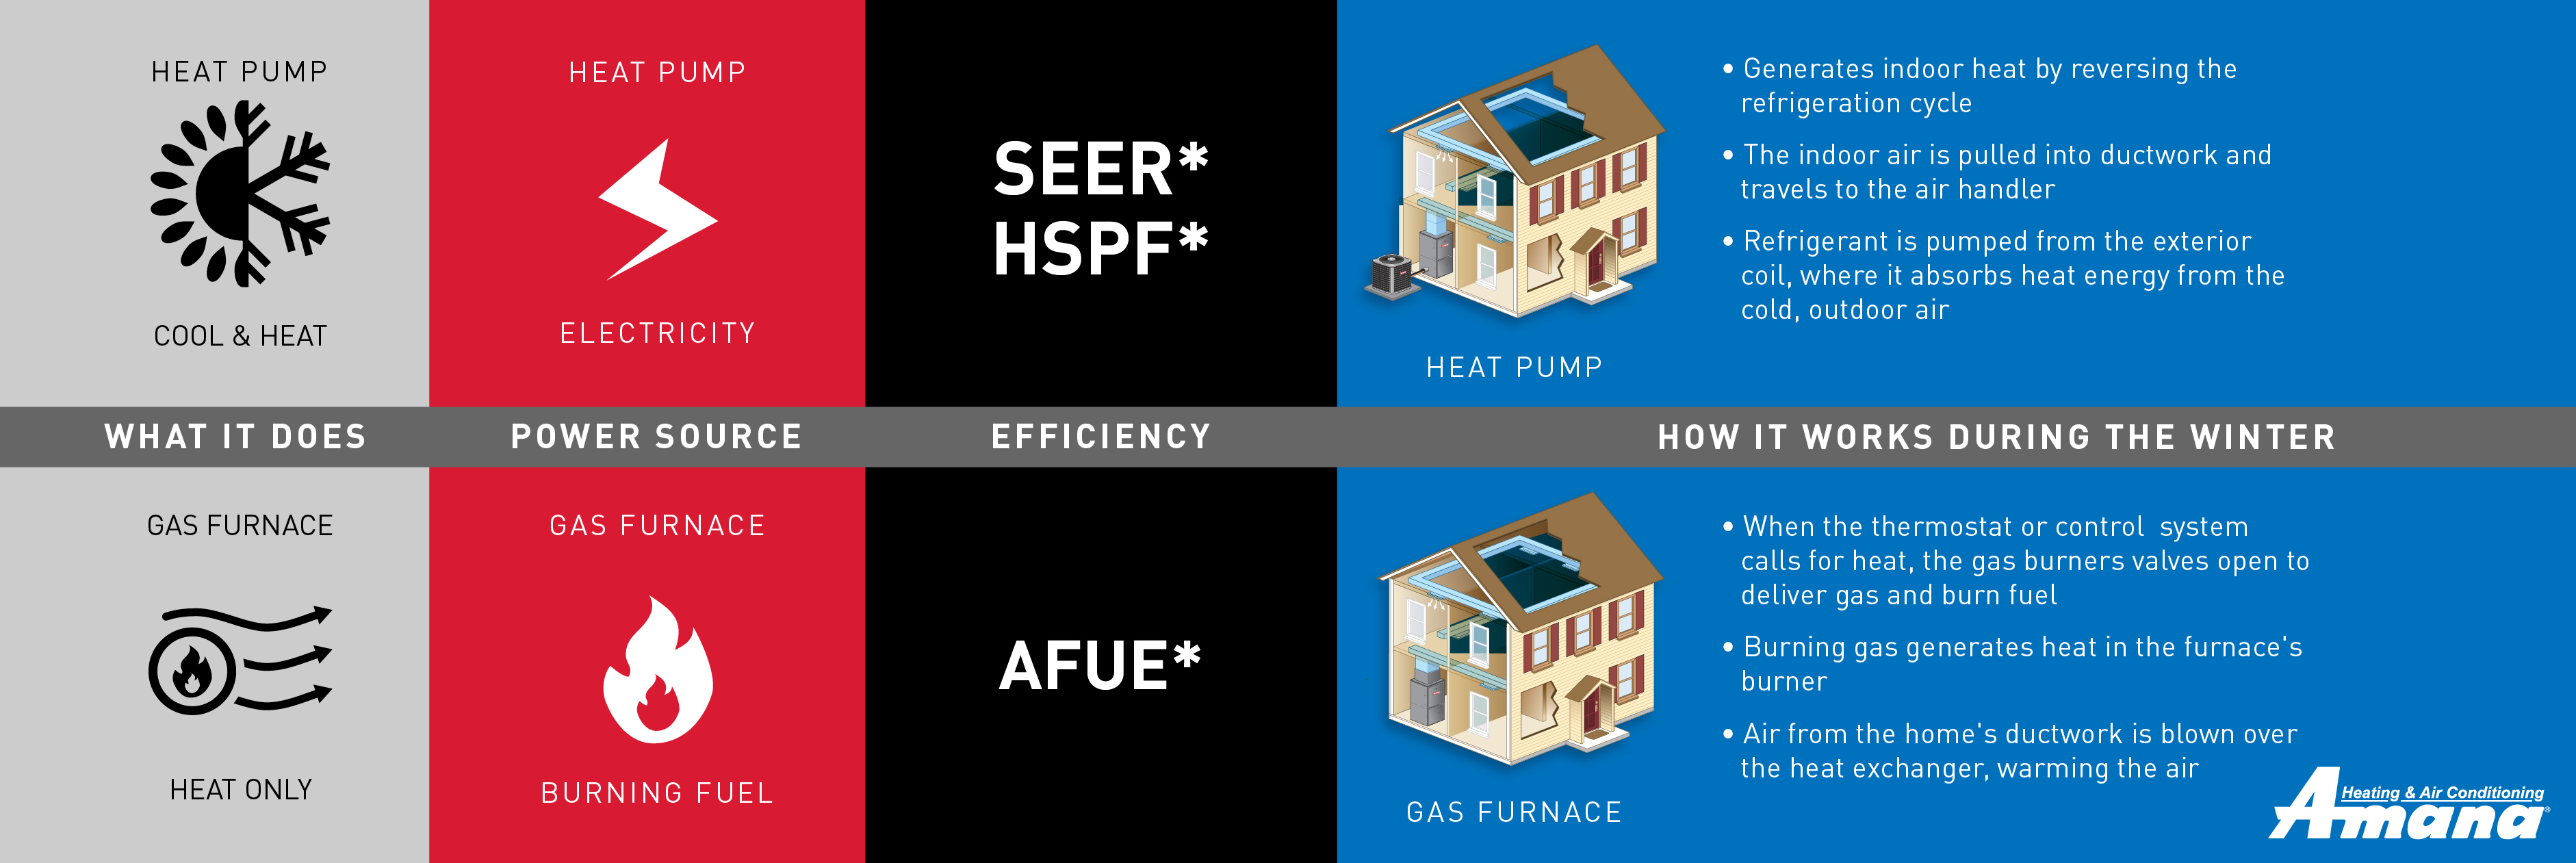 Heat Pump and Gas Furnace Comparison